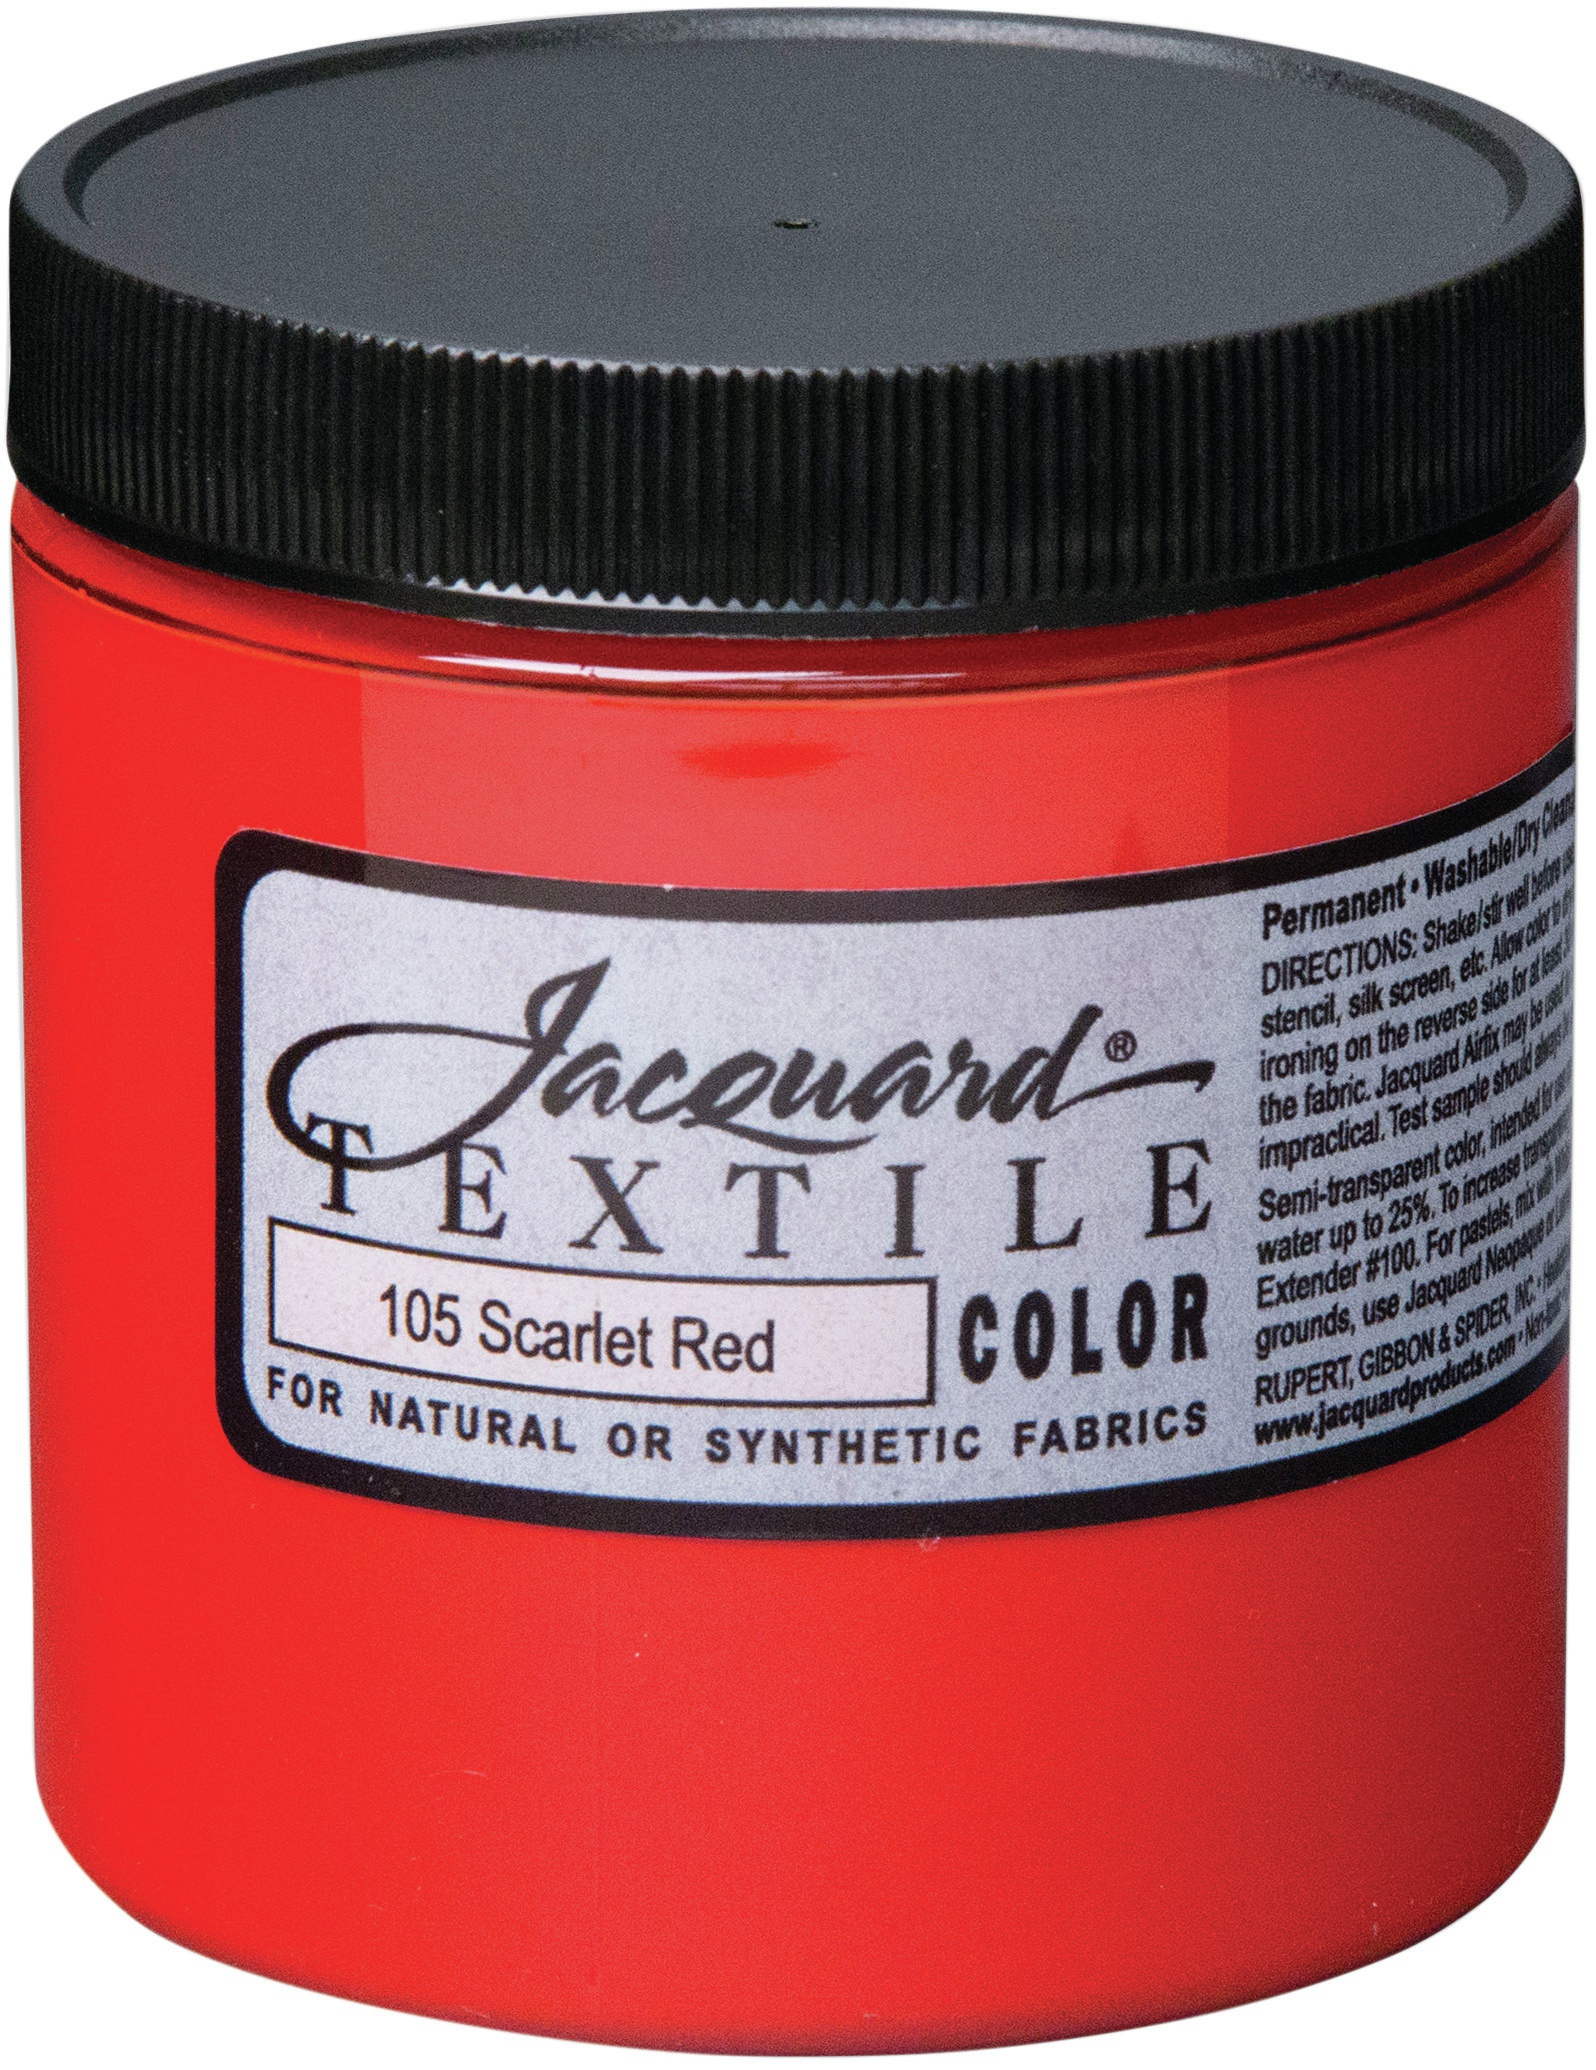 Jacquard Textile Color Fabric Paint 8oz-Scarlet Red | eBay